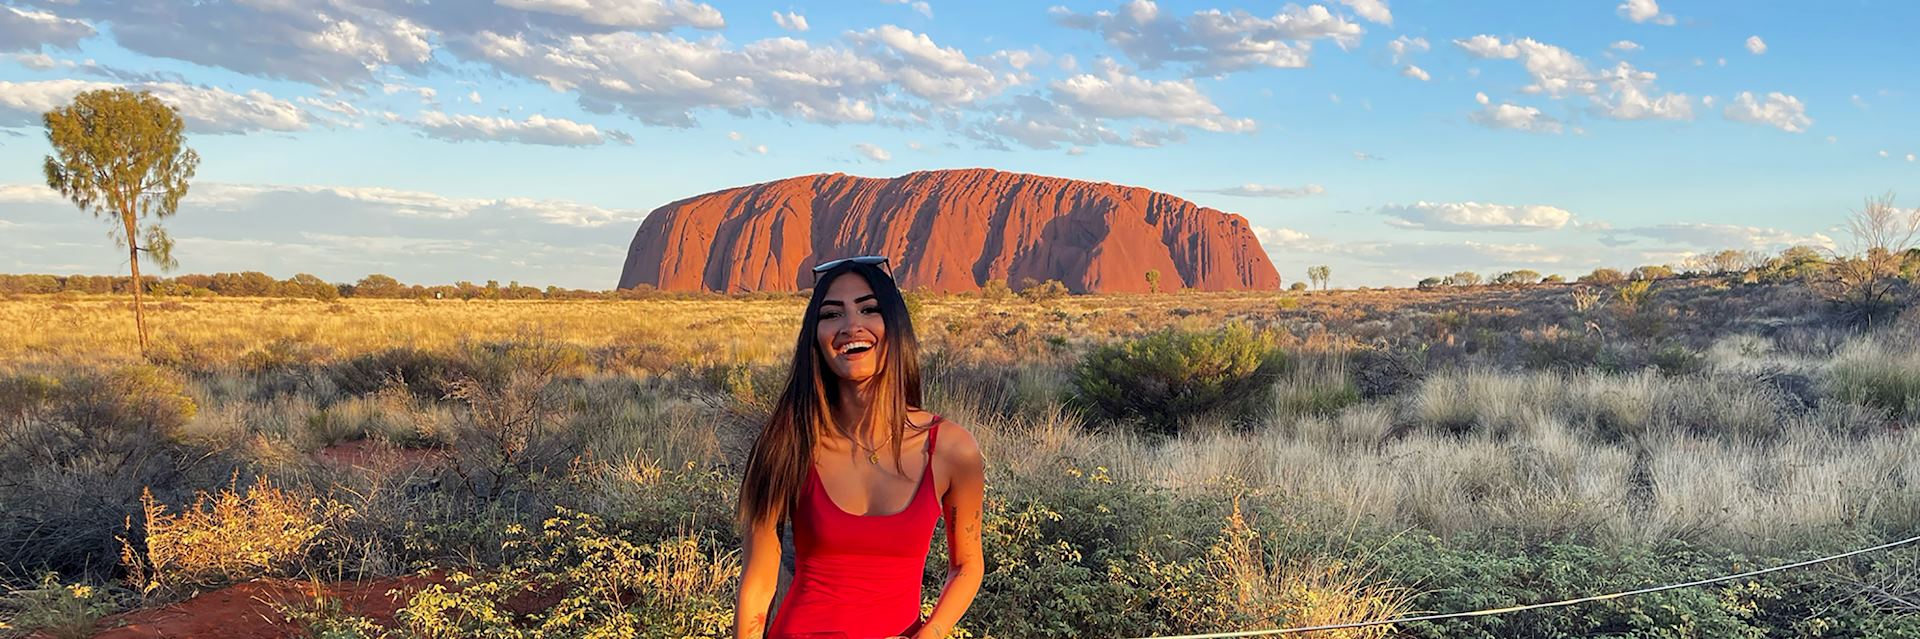 Jindy at Uluru, Northern Territory, Australia